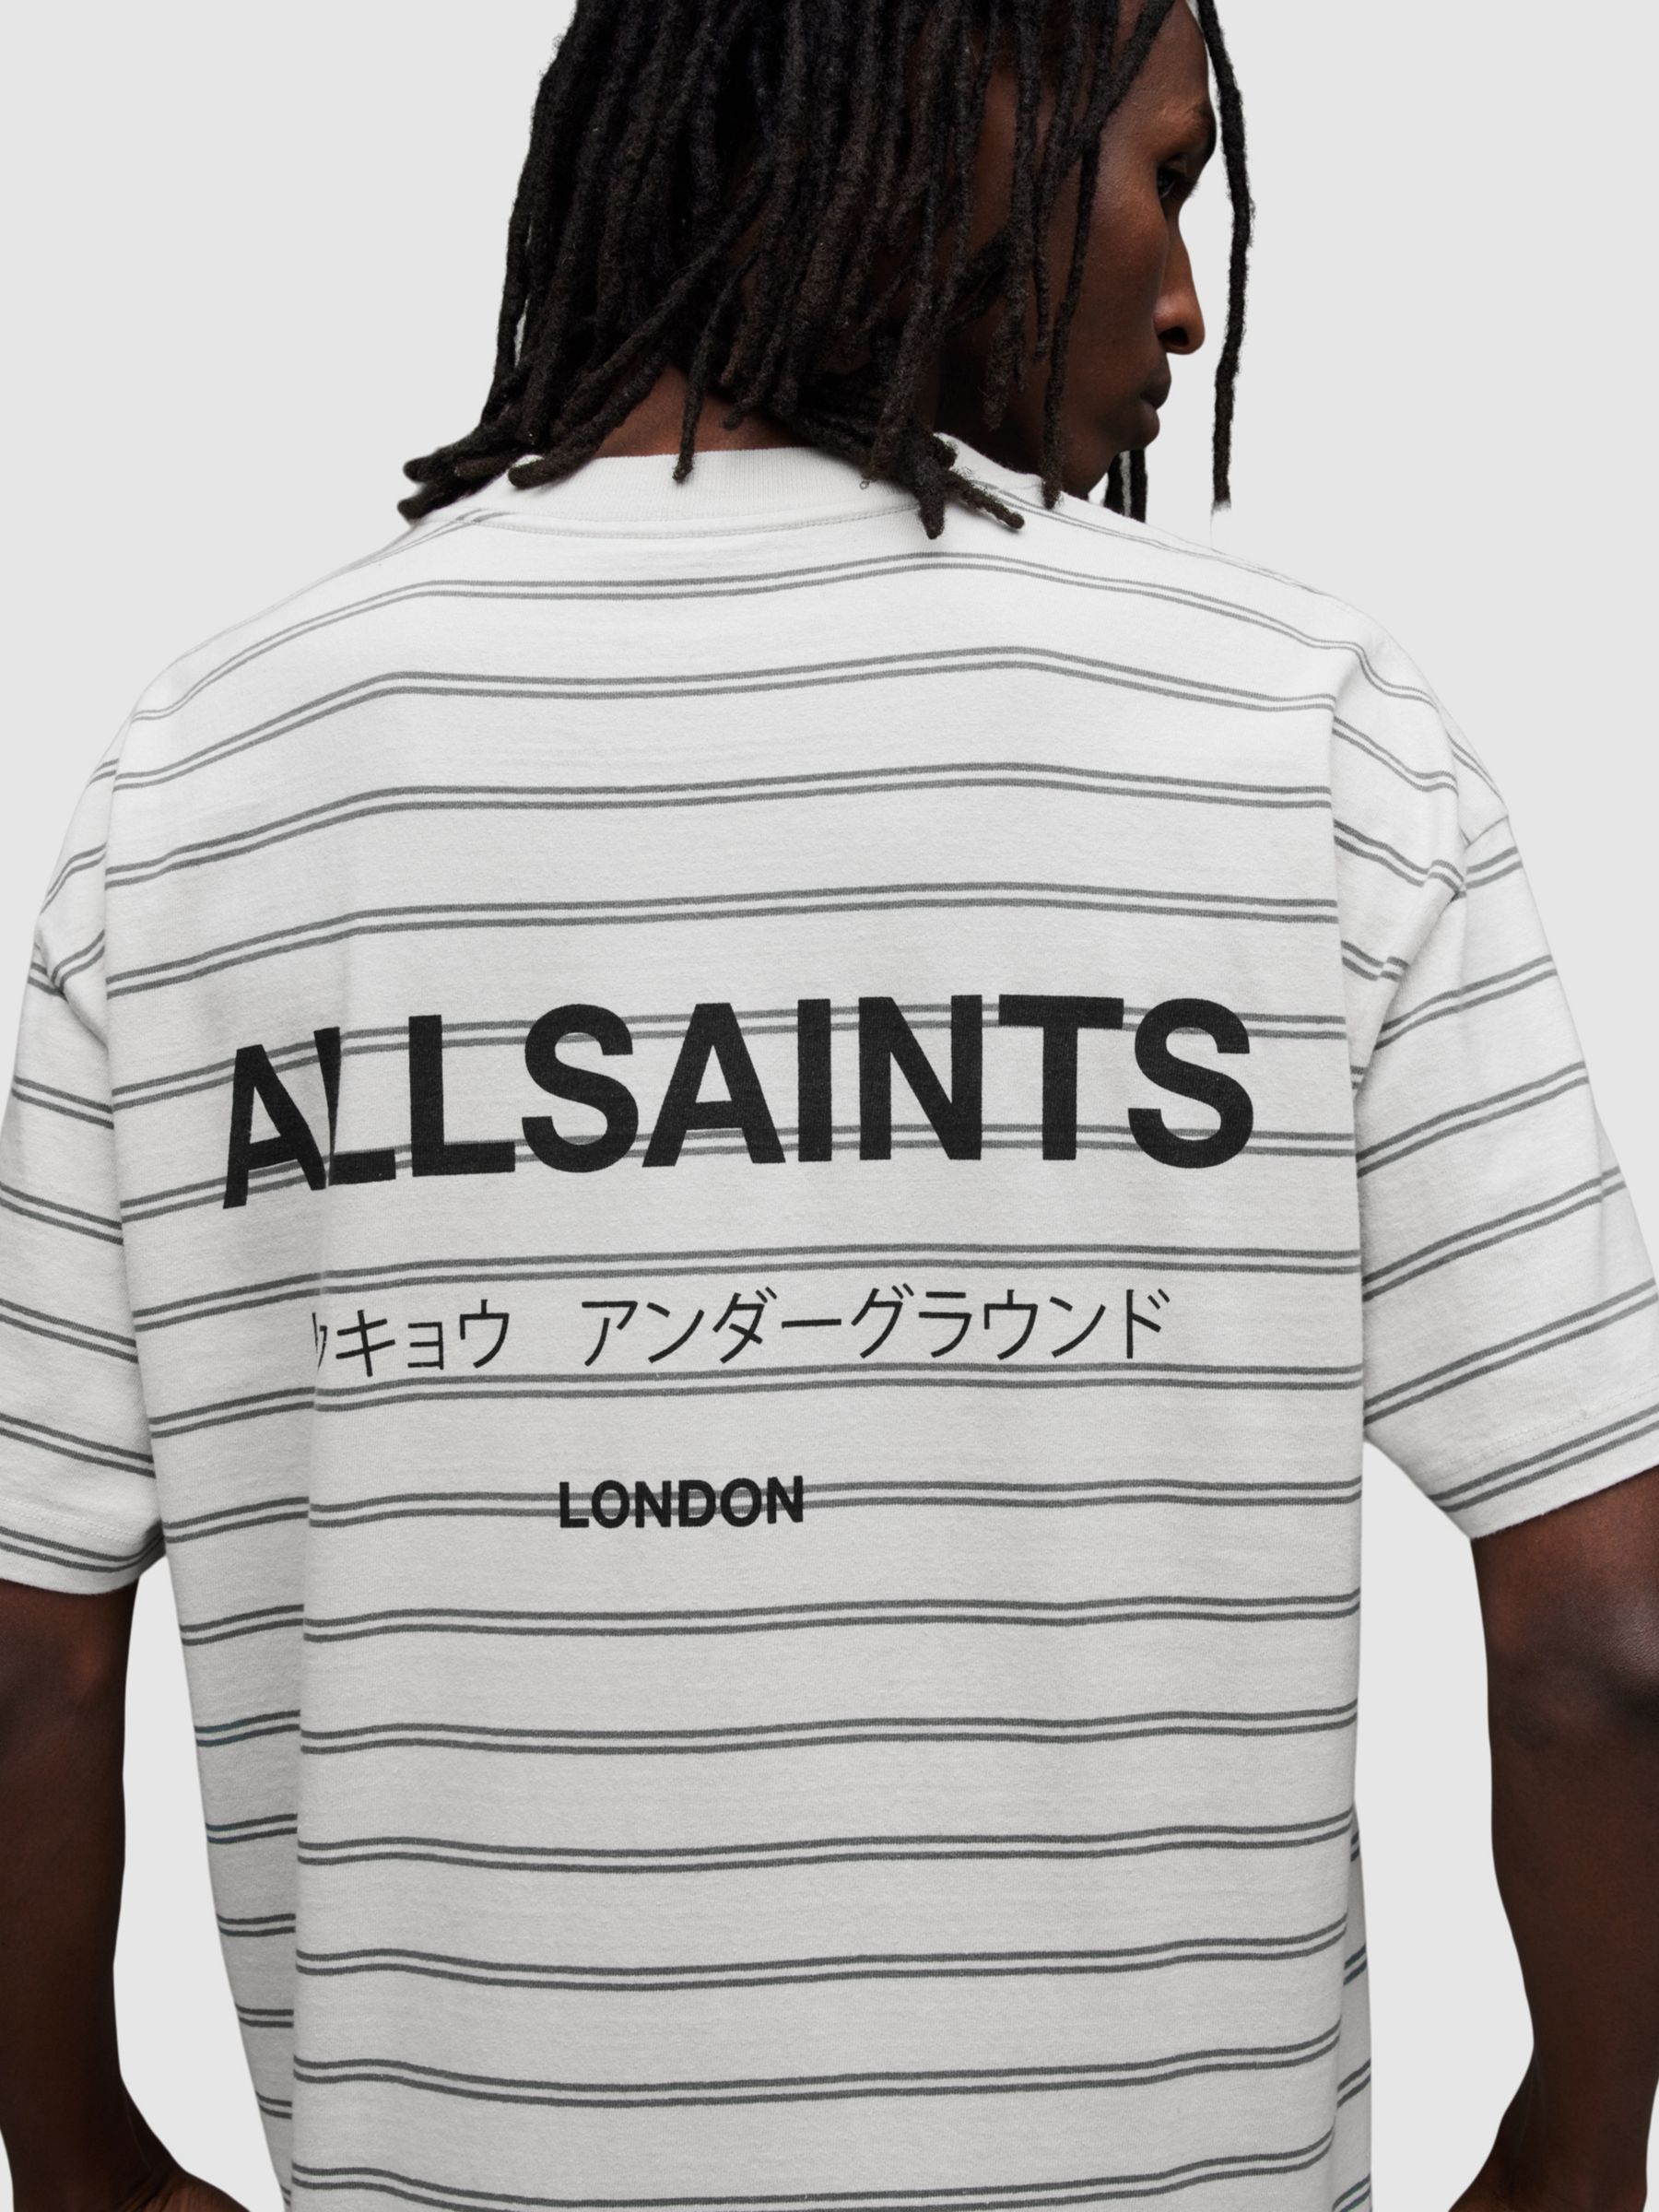 AllSaints Underground Stripe T-Shirt, Grey/Multi, L